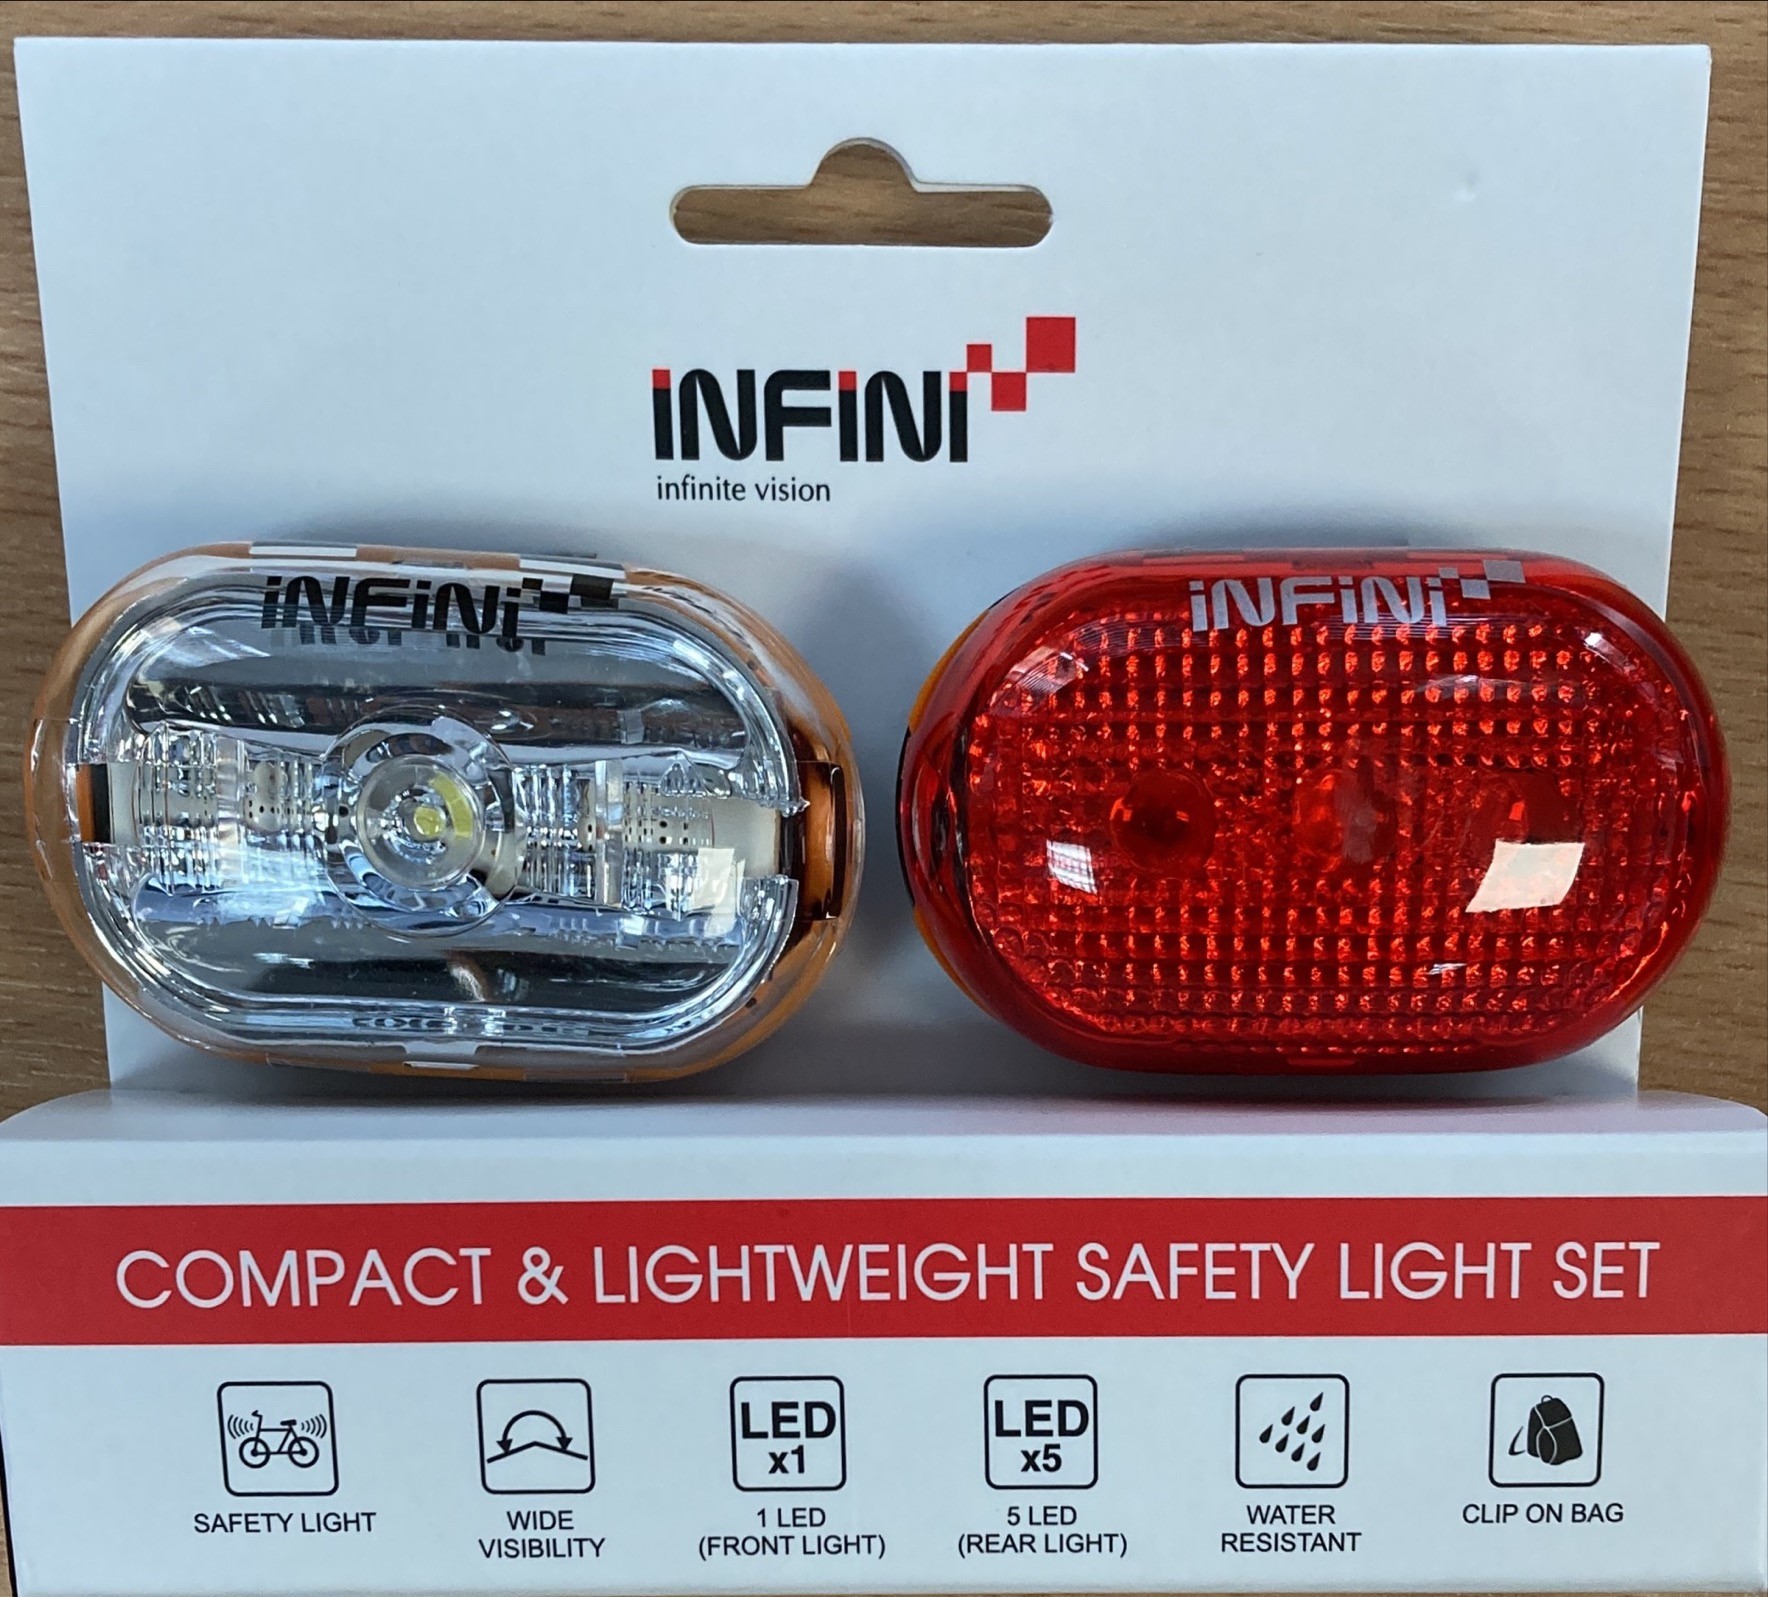 INFINI lights